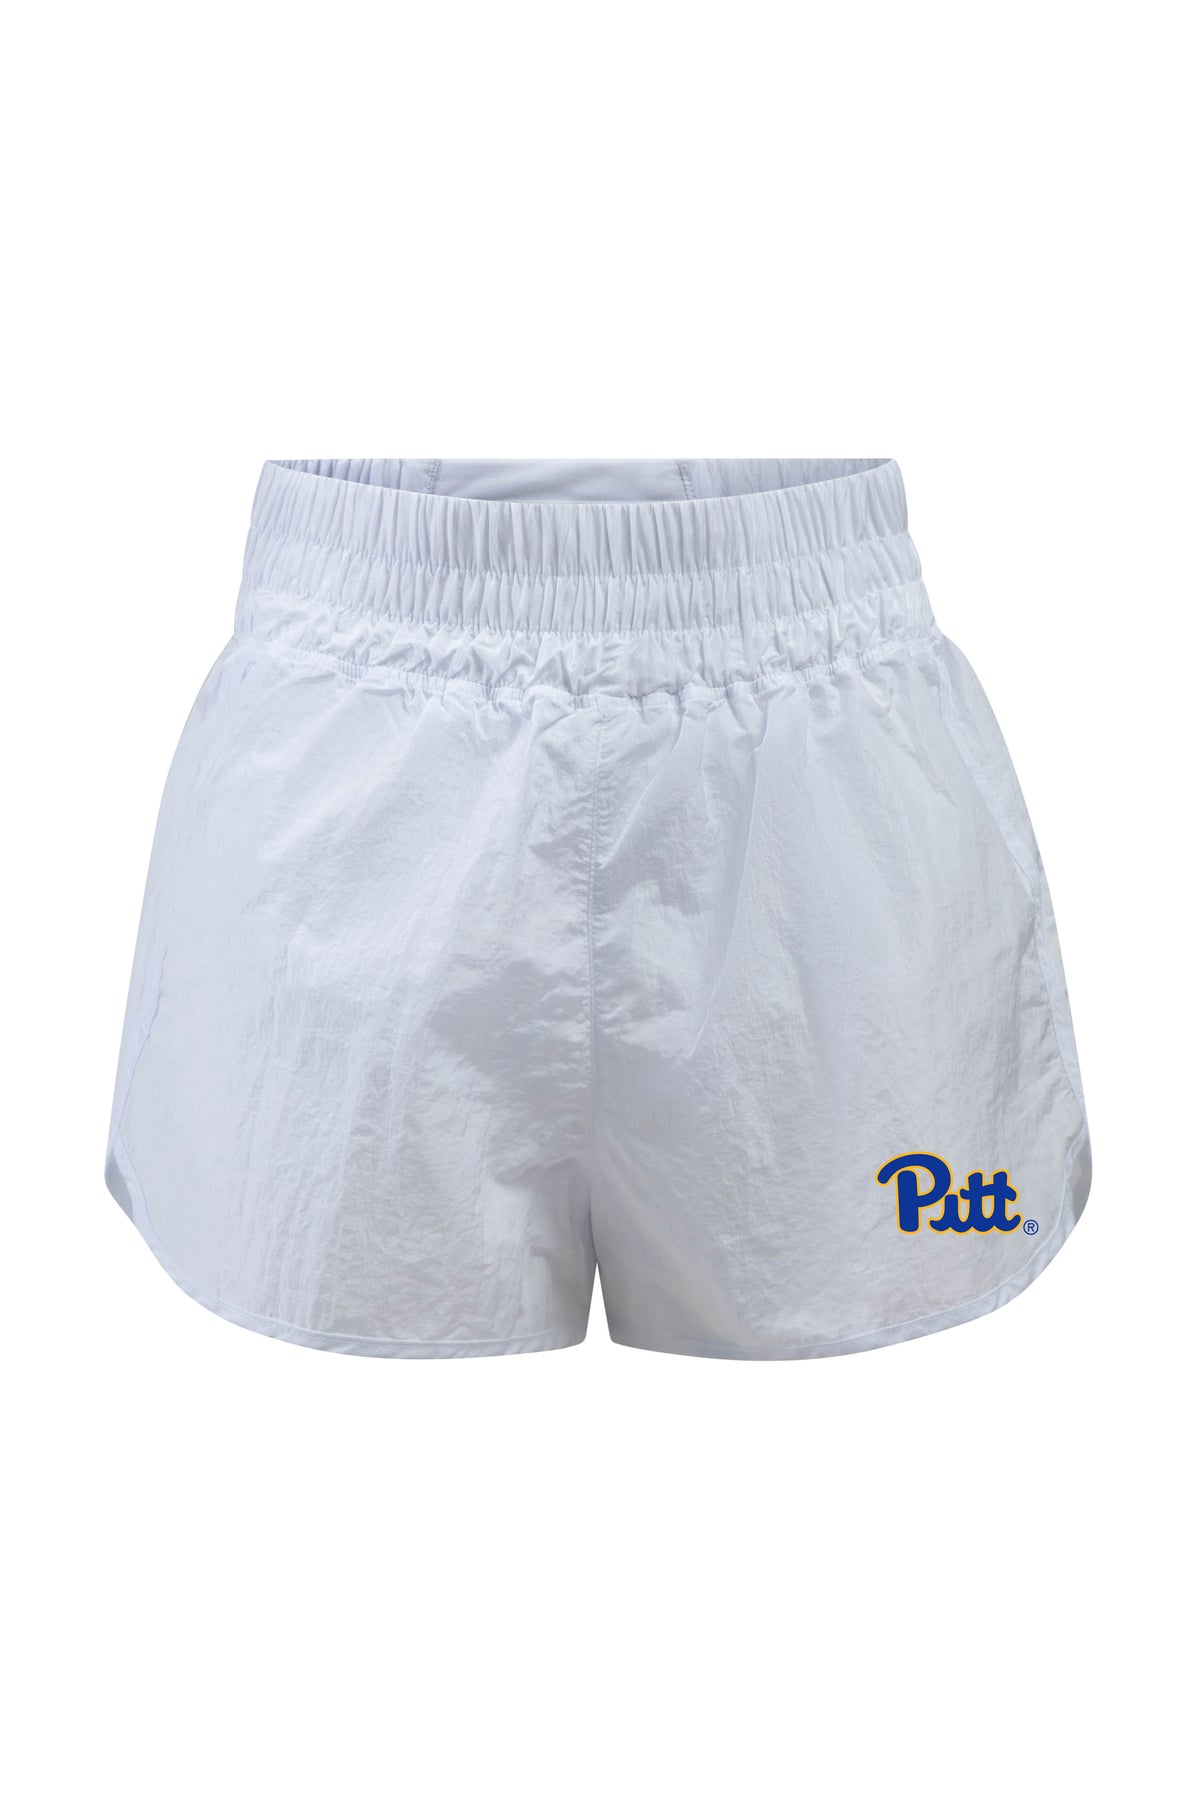 University of Pittsburgh Boxer Short